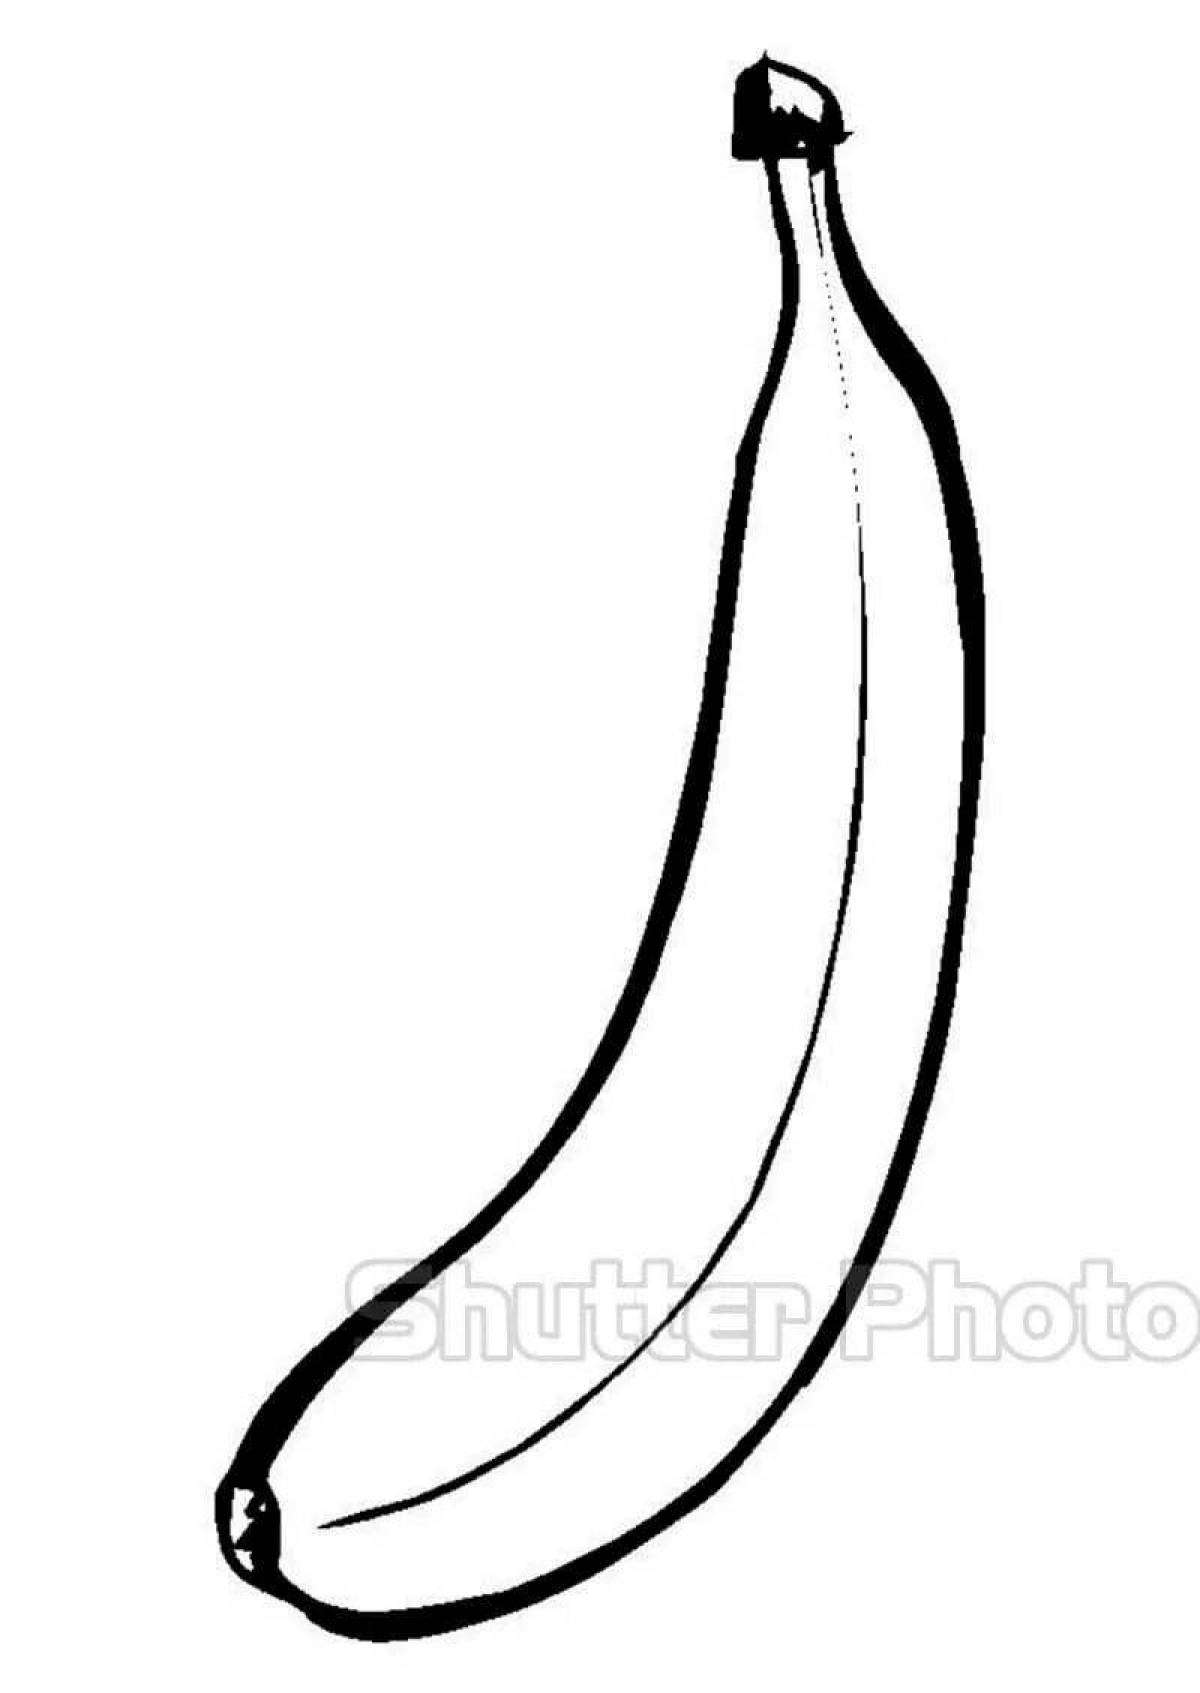 Adorable banana drawing